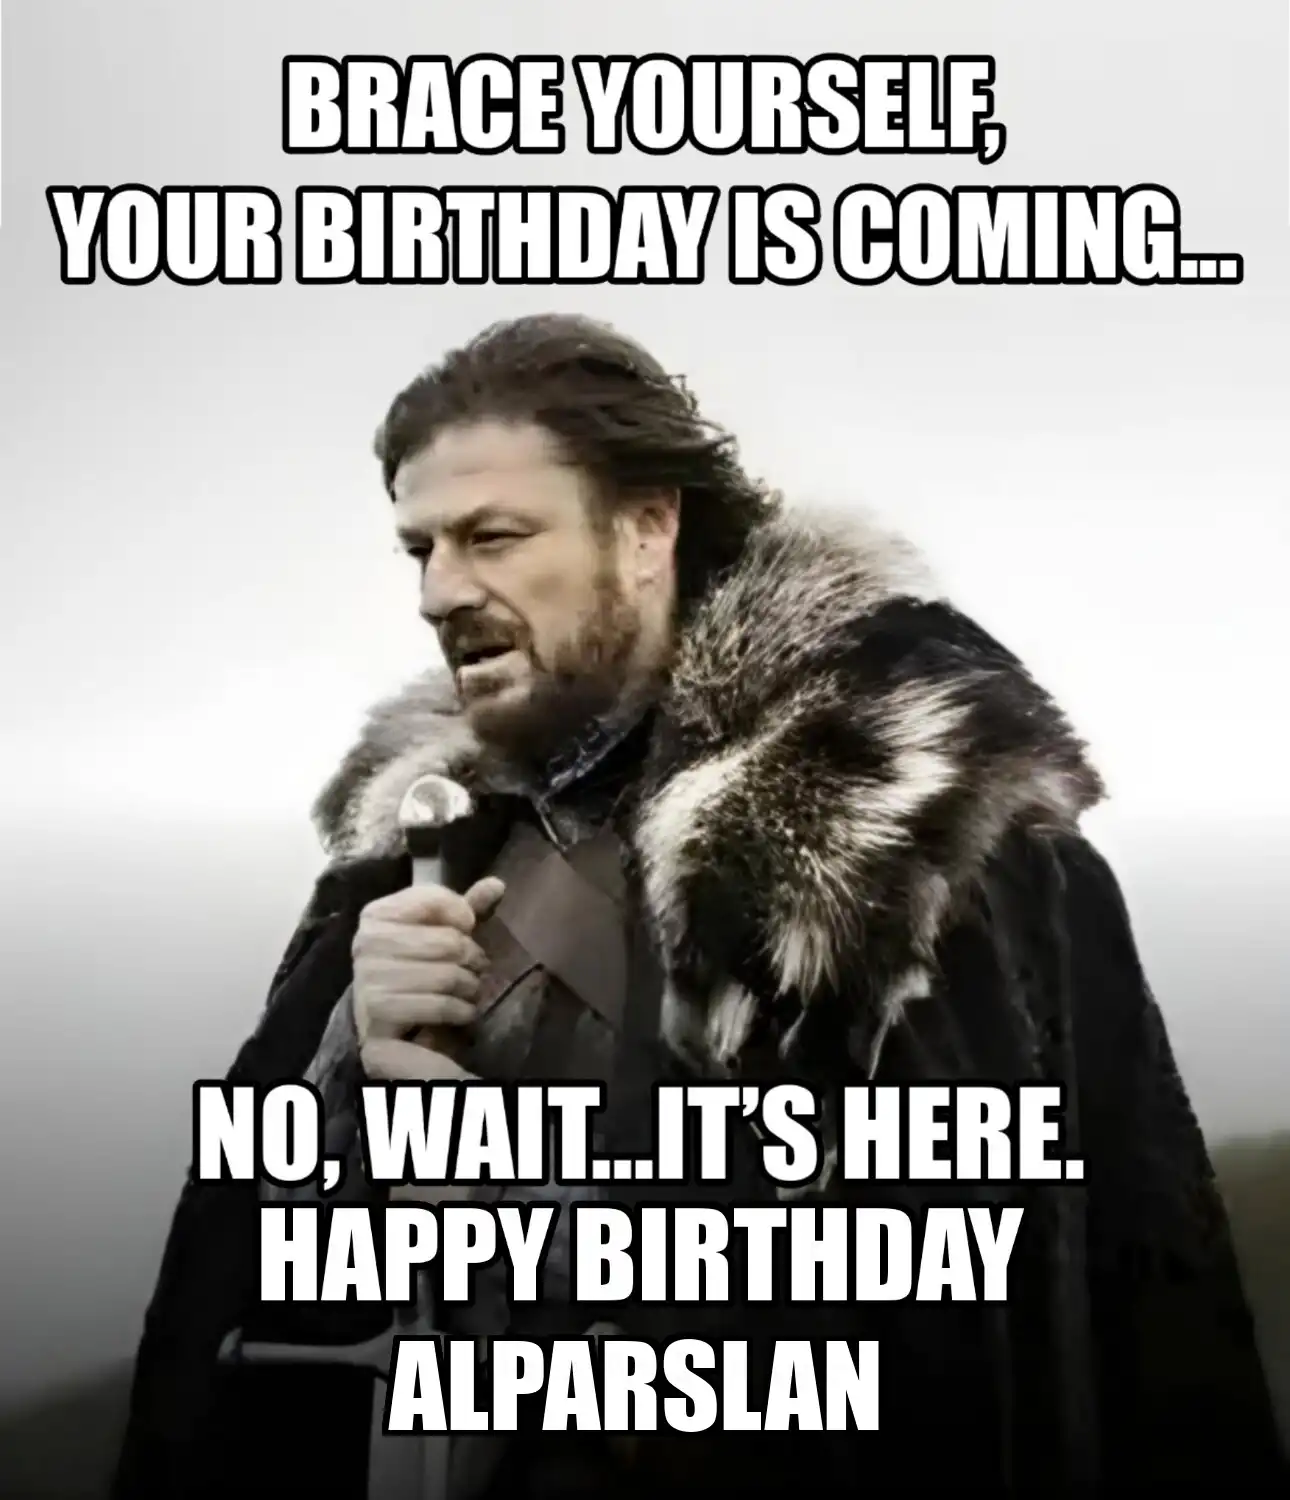 Happy Birthday Alparslan Brace Yourself Your Birthday Is Coming Meme